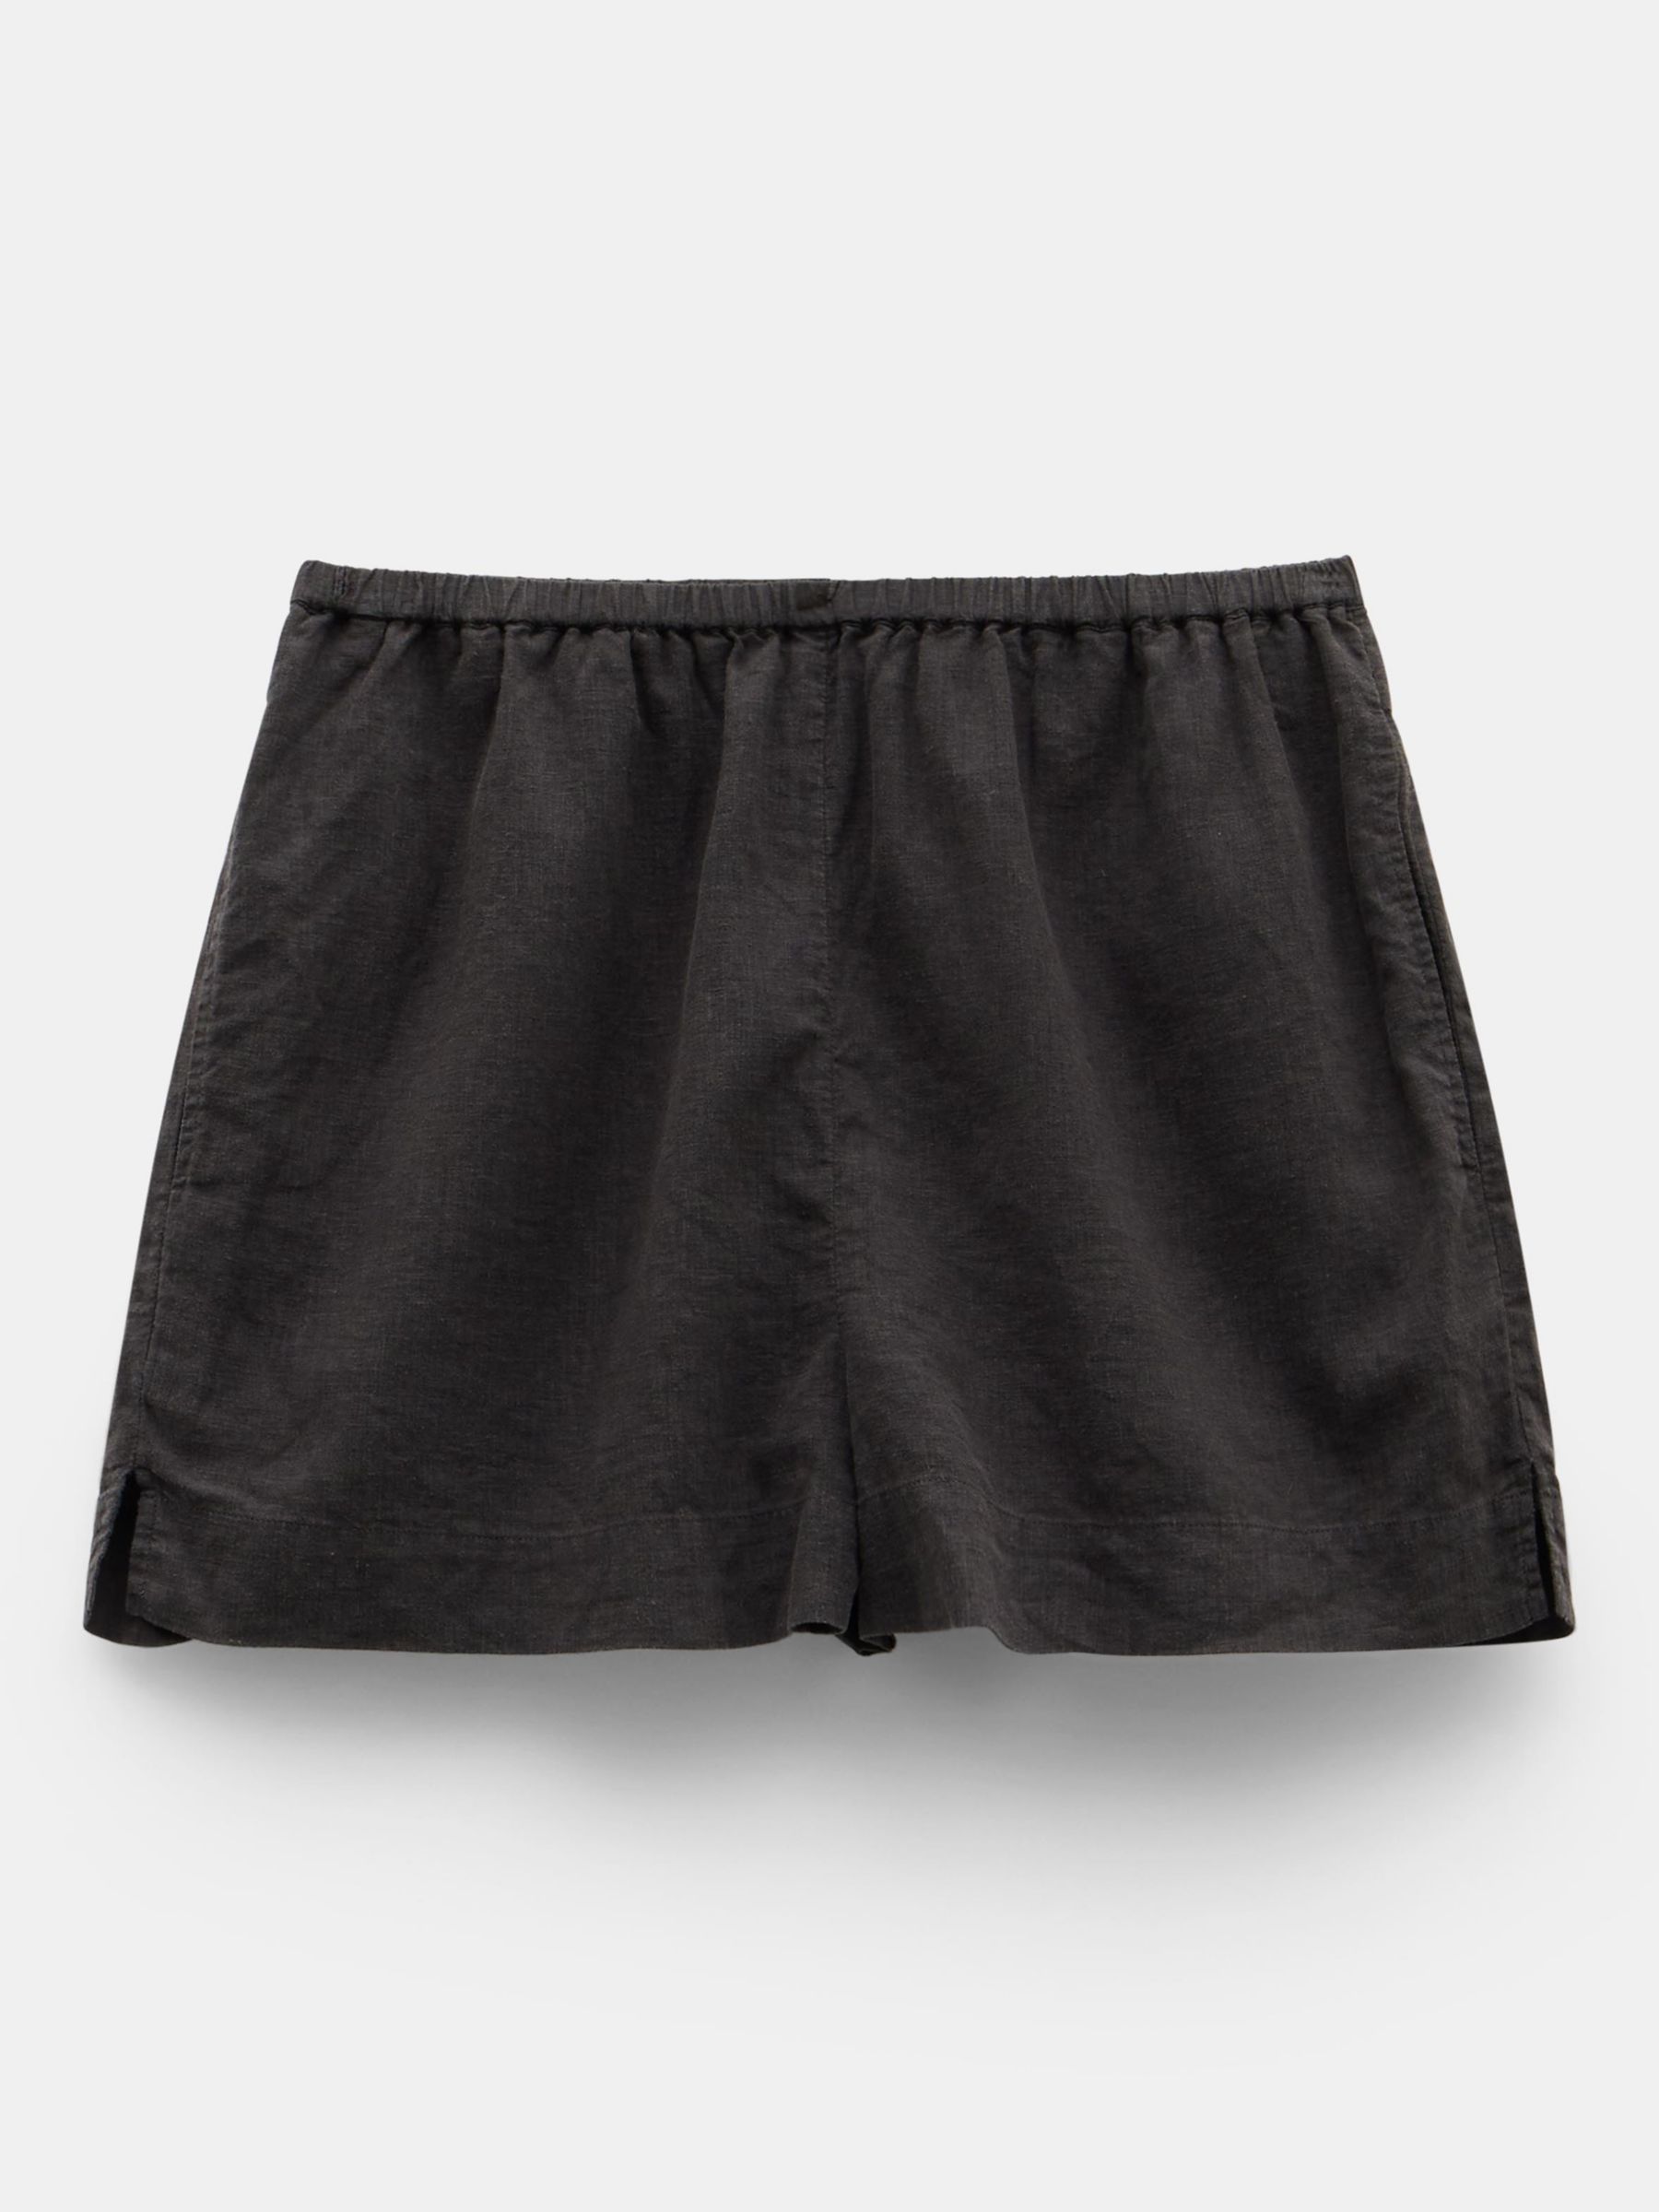 HUSH Lana Linen Blend Beach Shorts, Washed Black, L